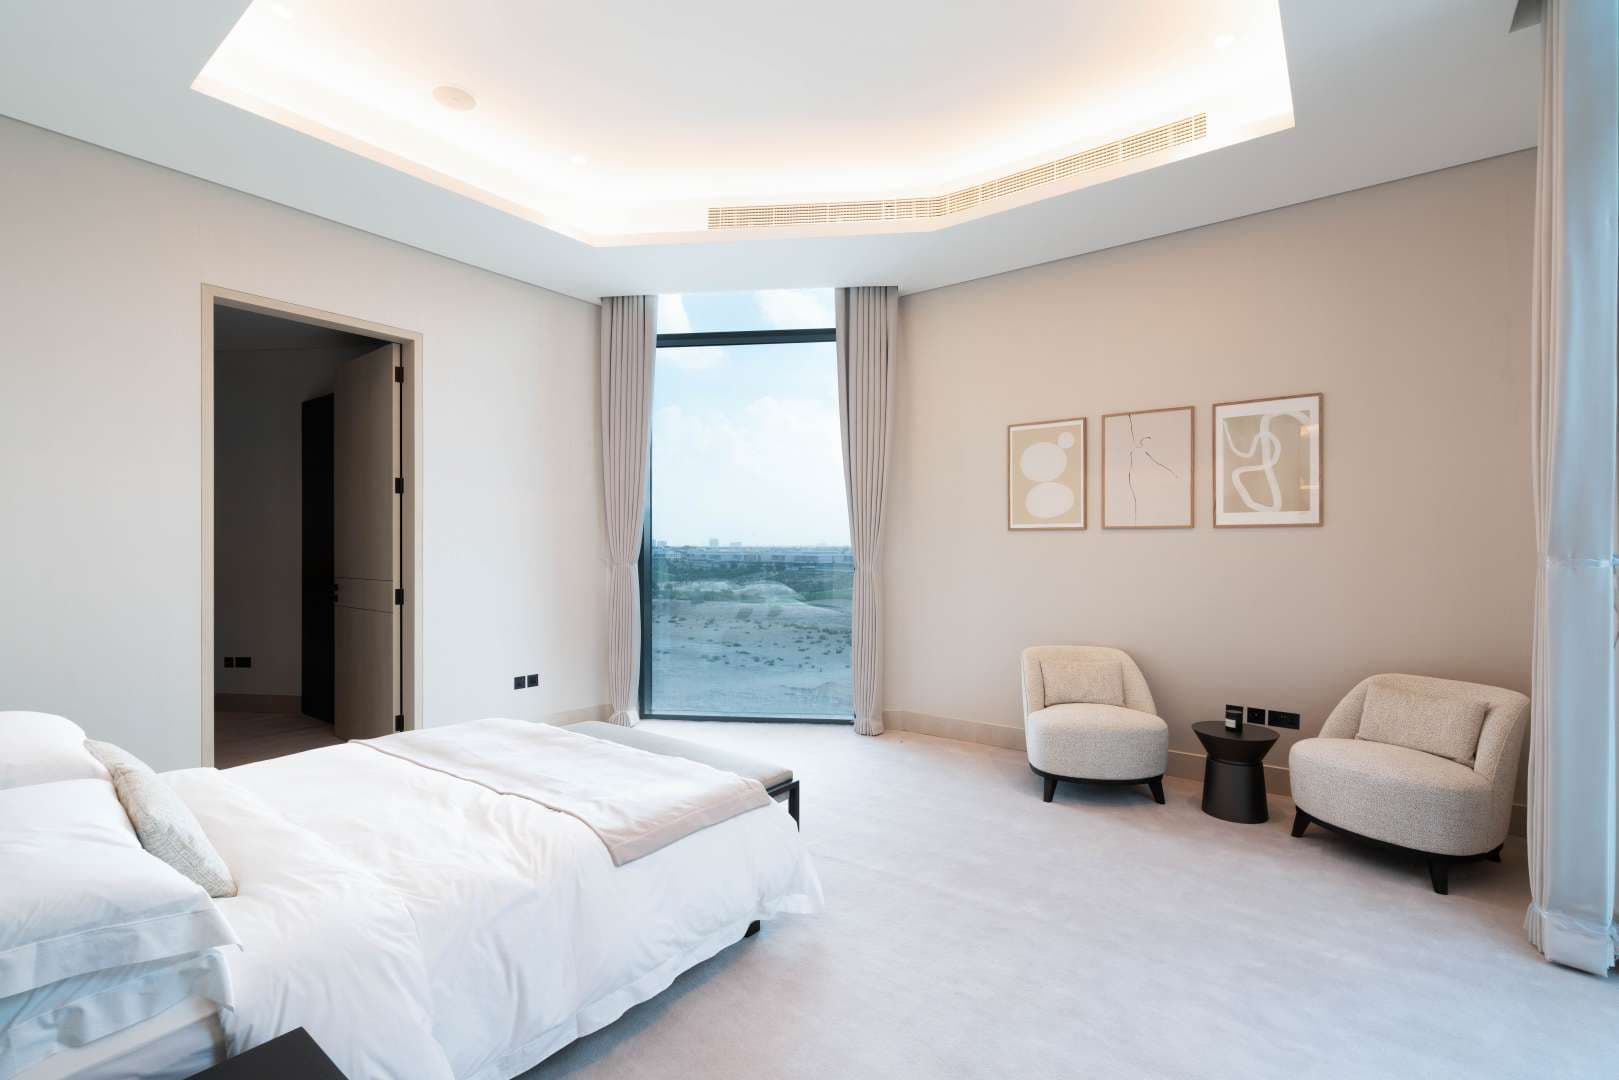 9 Bedroom Villa For Sale Dubai Hills View Lp05164 2cd3859dc2b7ce00.jpg